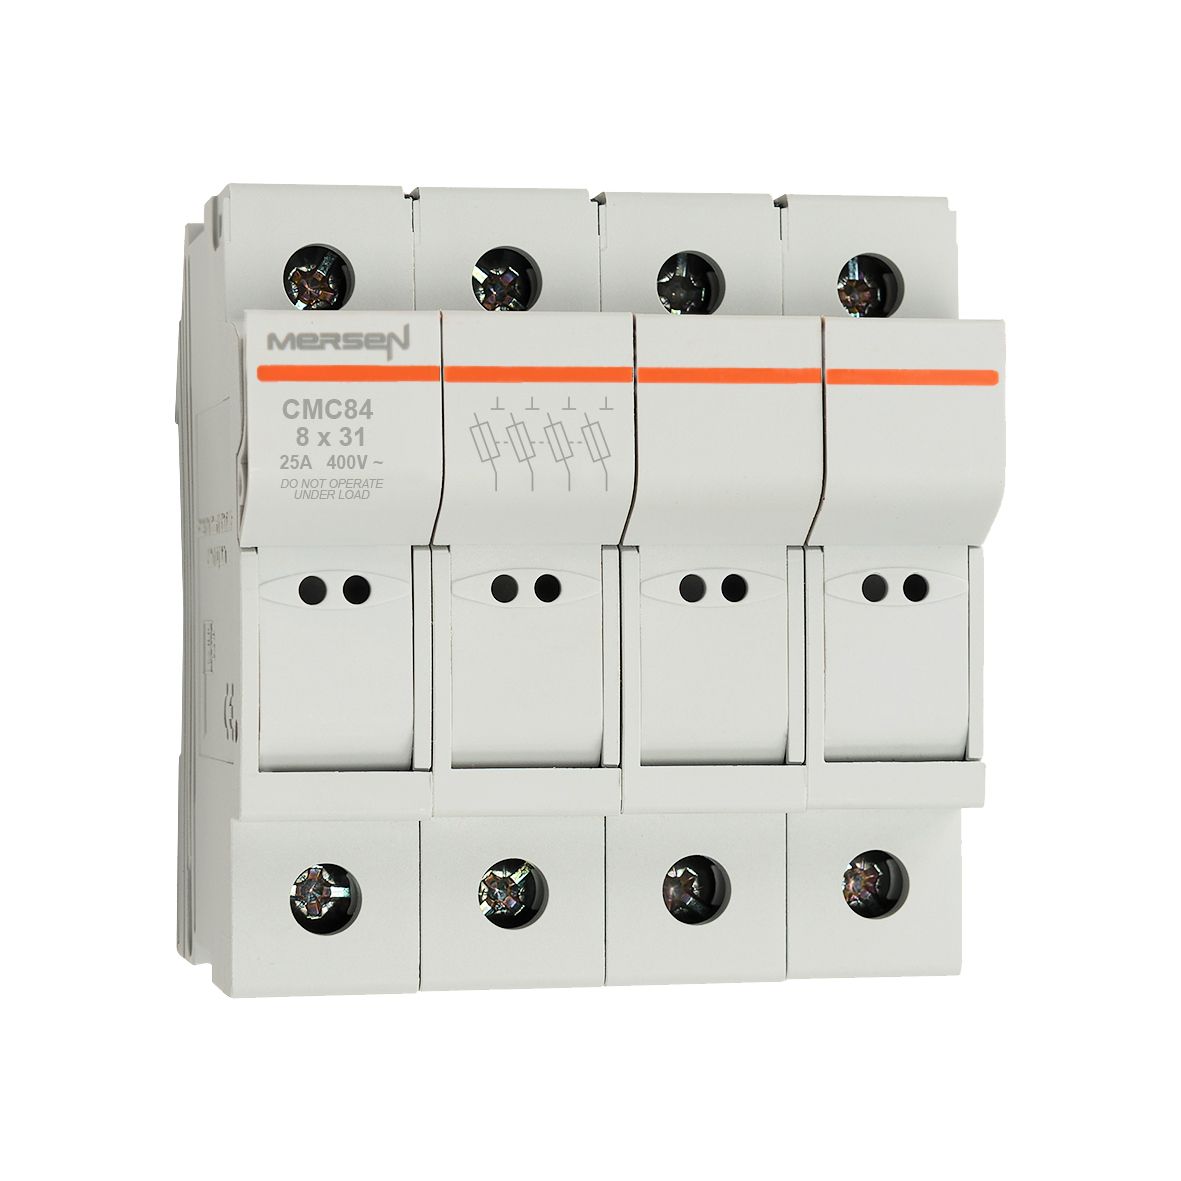 J1062677 - CMC8 modular fuse holder, IEC, 4P, 8x32, DIN rail mounting, IP20